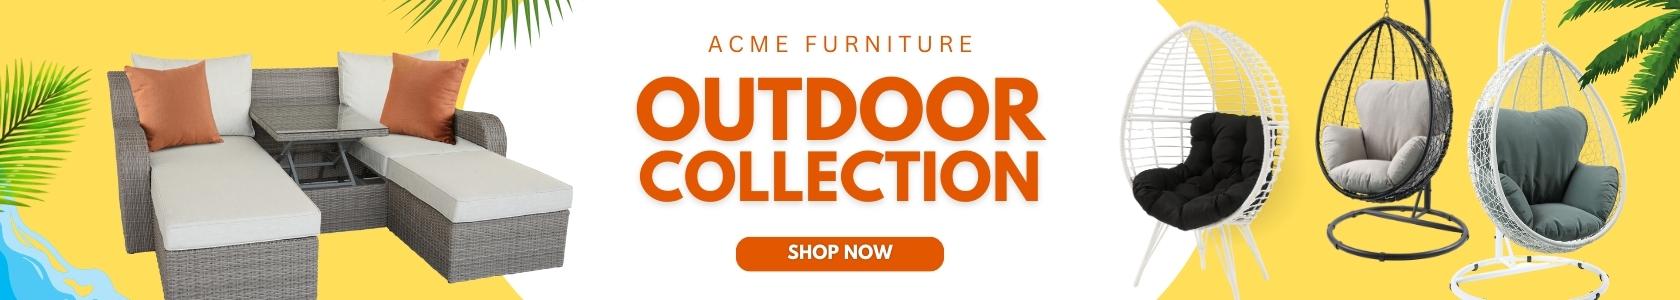 Acme outdoor sale banner